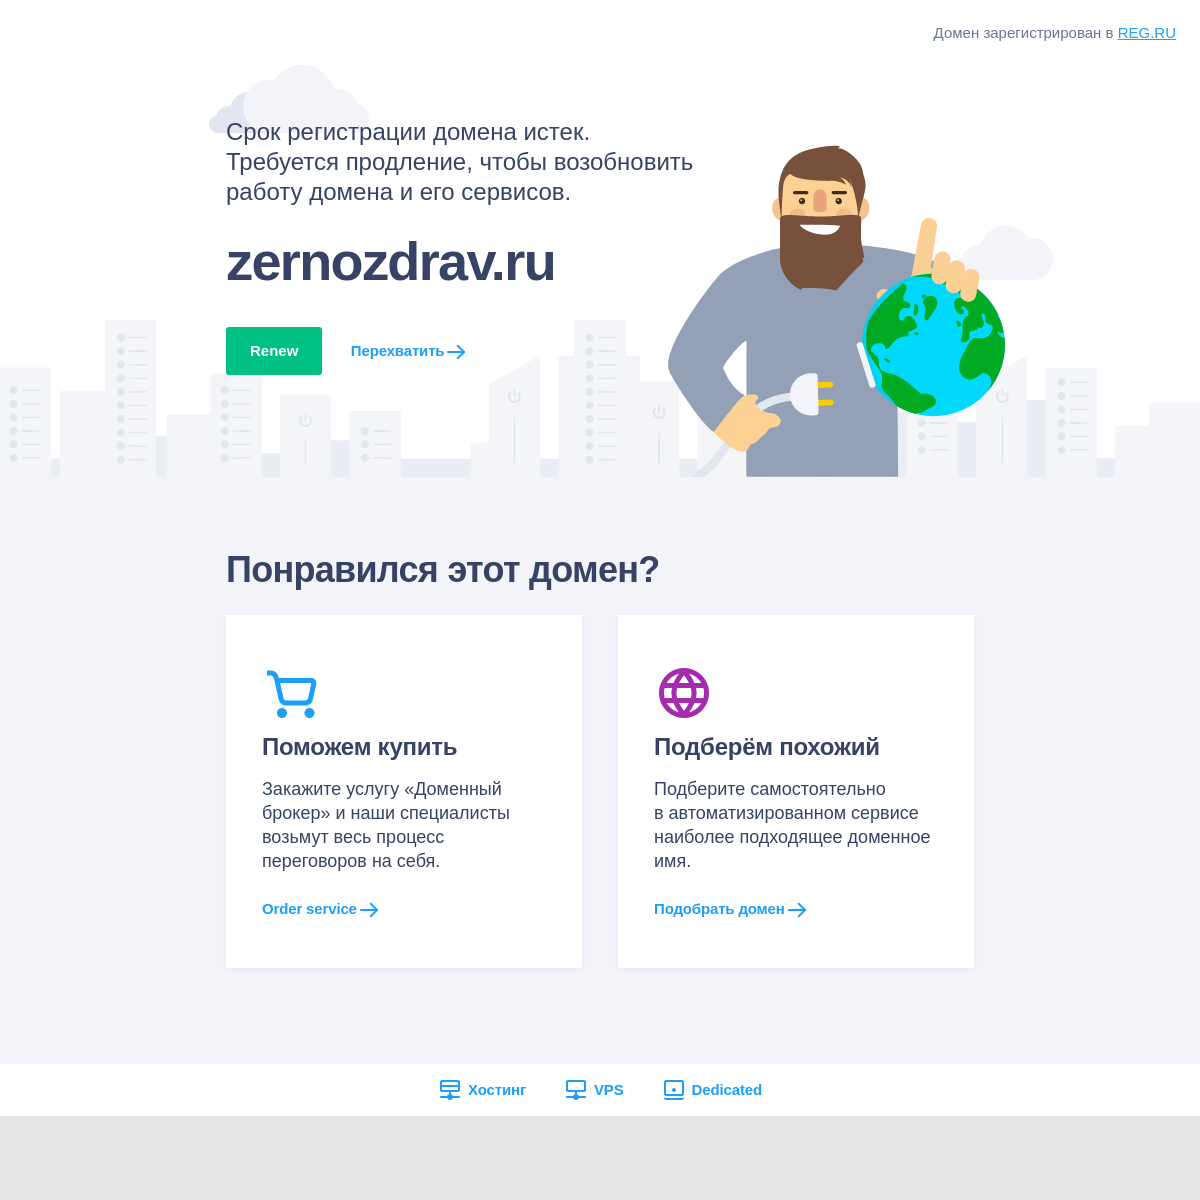 A complete backup of zernozdrav.ru